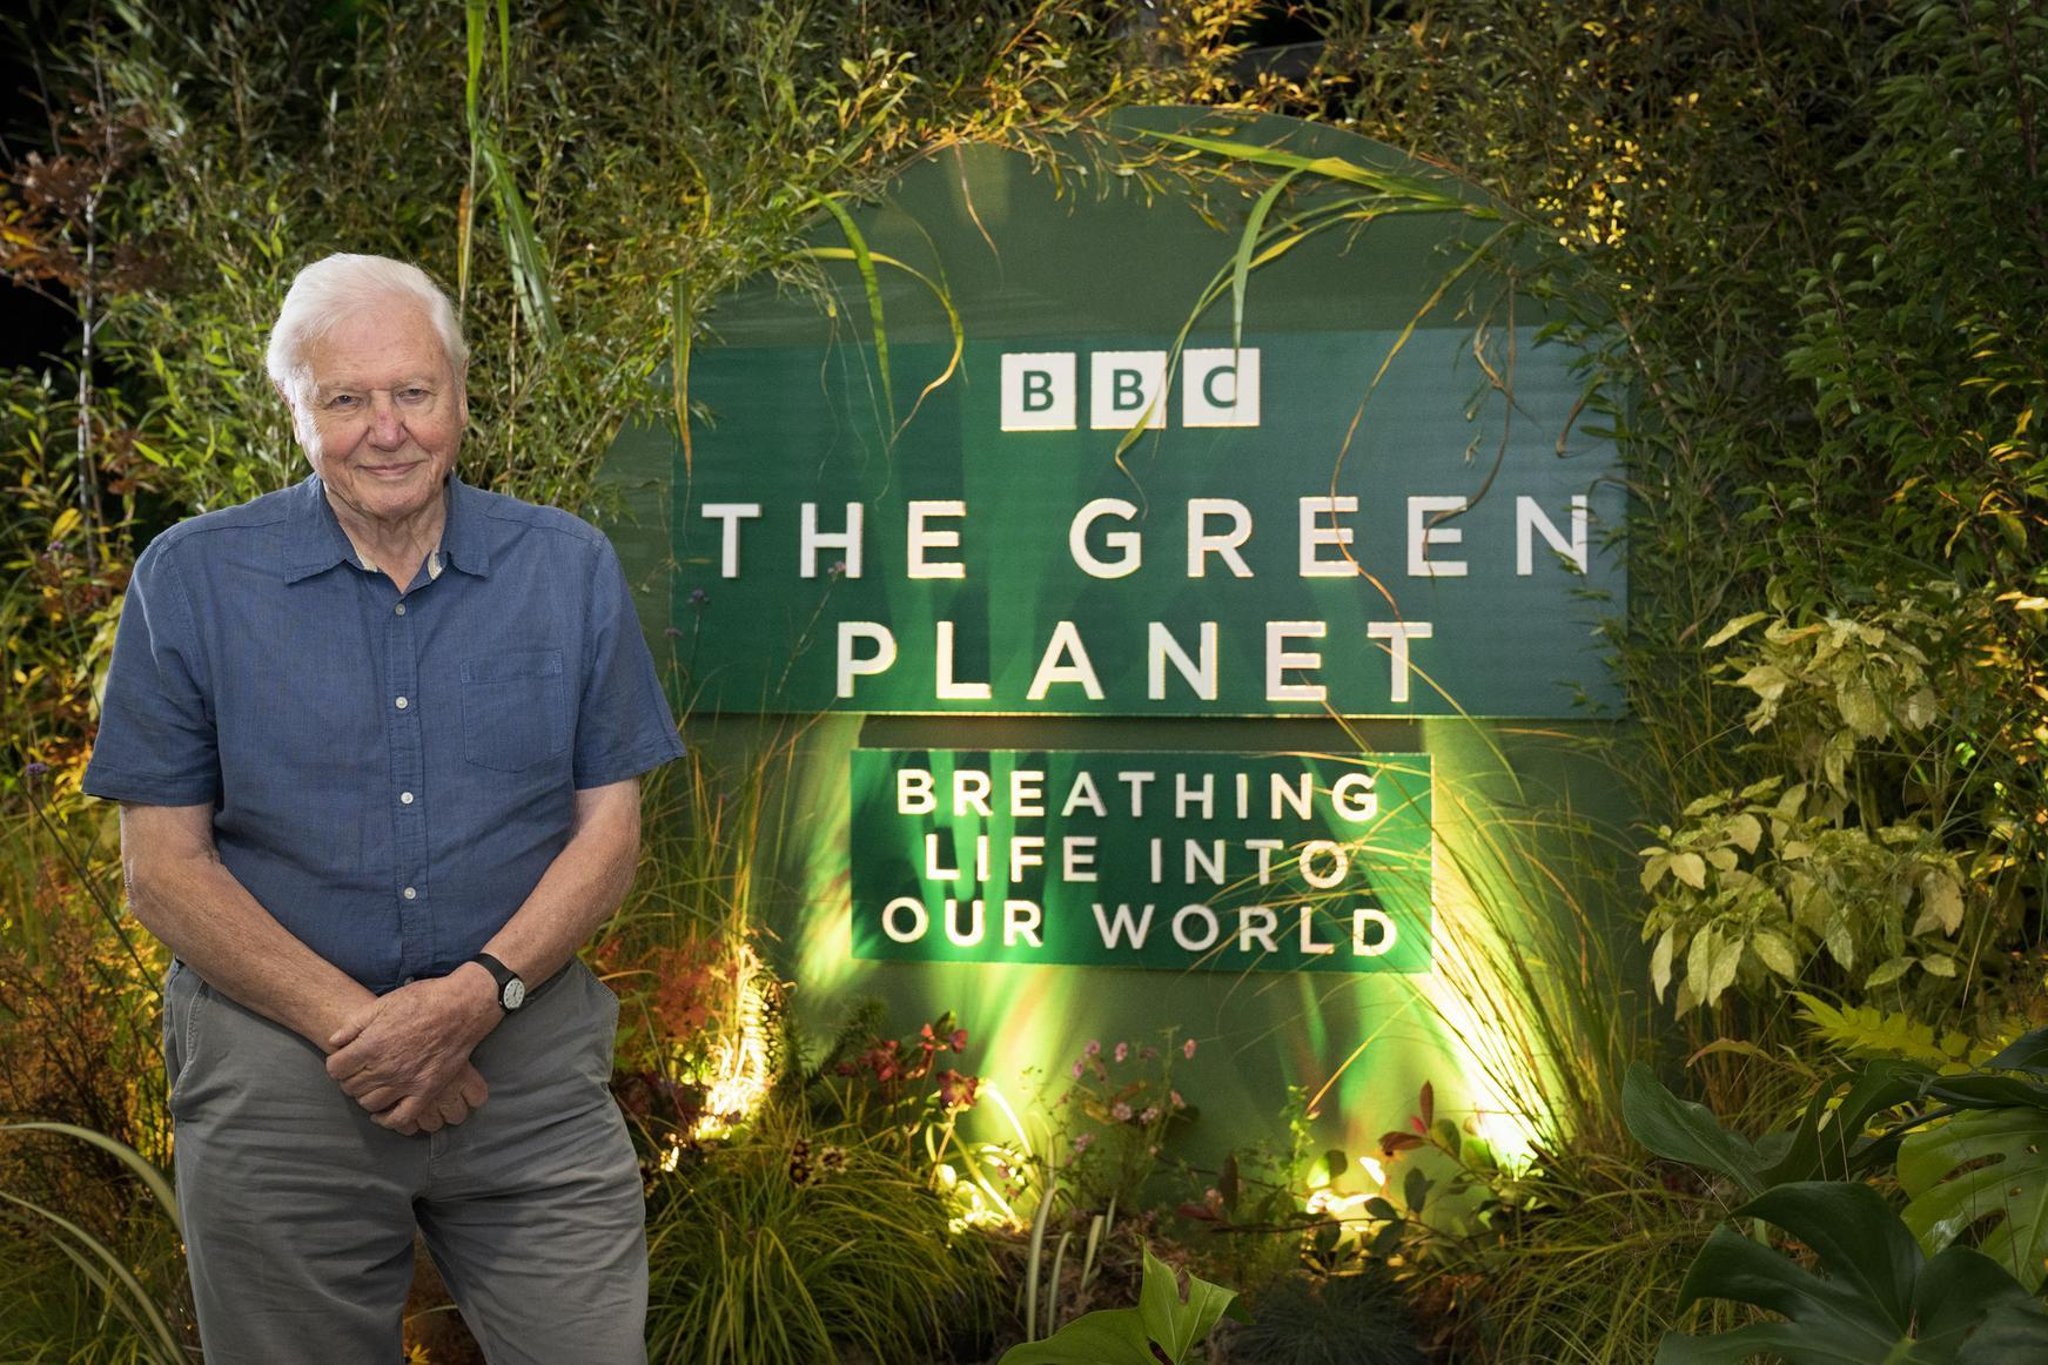 The Planet: Sir David Attenborough hails public's awakening on importance of nature | Yorkshire